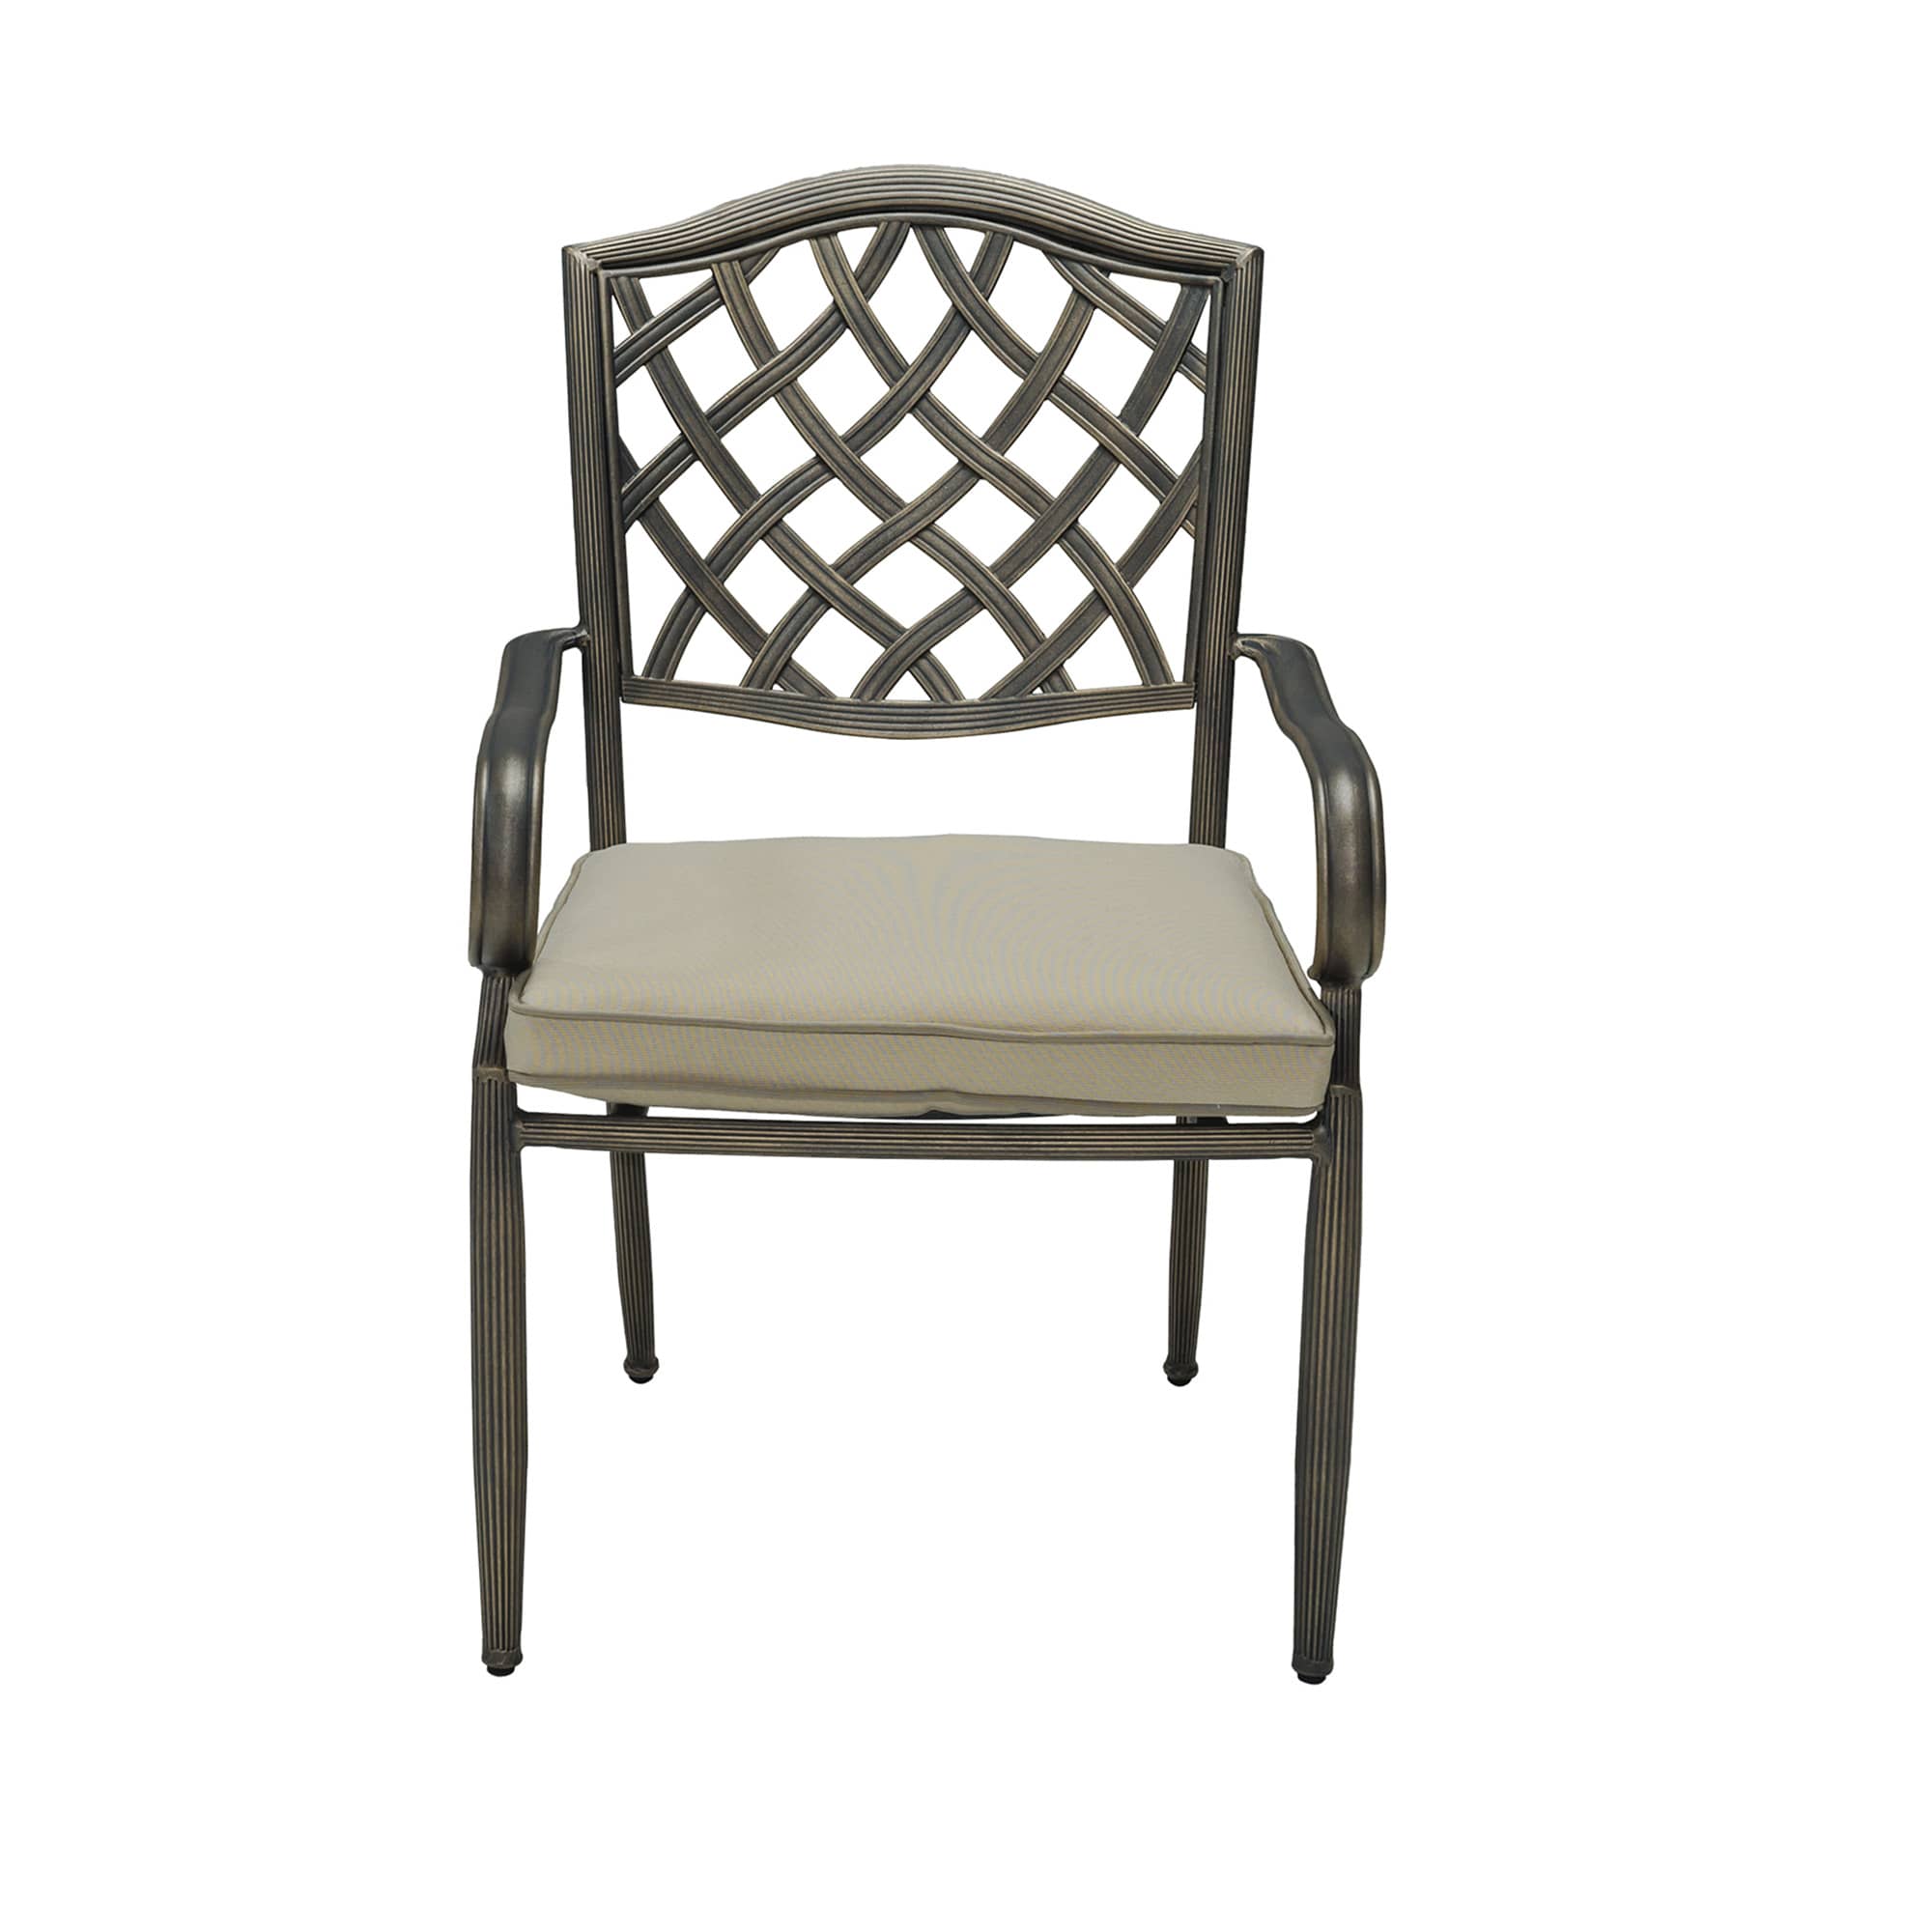 CASAINC 4-Piece Brown Cast Aluminum Outdoor Arm Dining Chair Patio Bistro Chairs with Beige Cushion-Casainc Canada